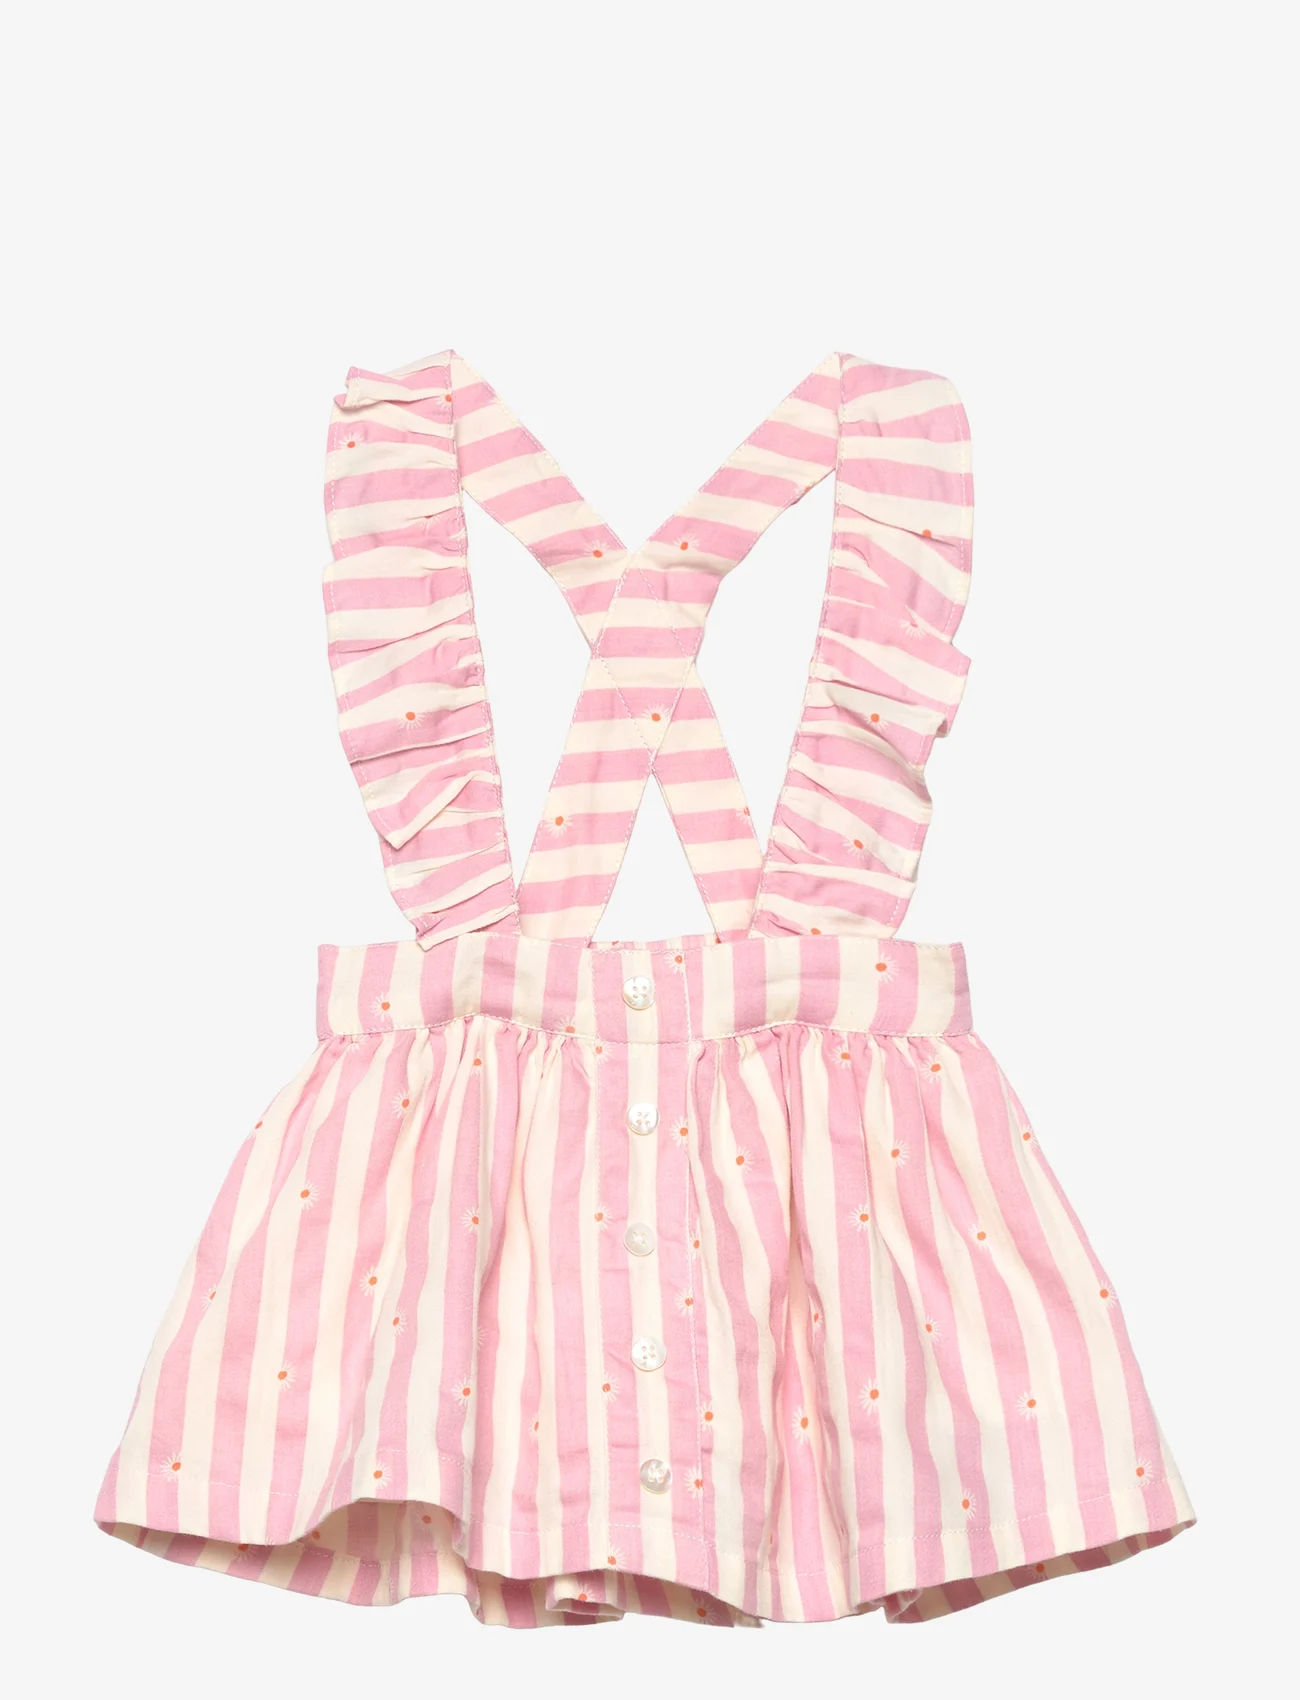 The New - TNSJin Skirt - robe salopette - pink nectar - 0